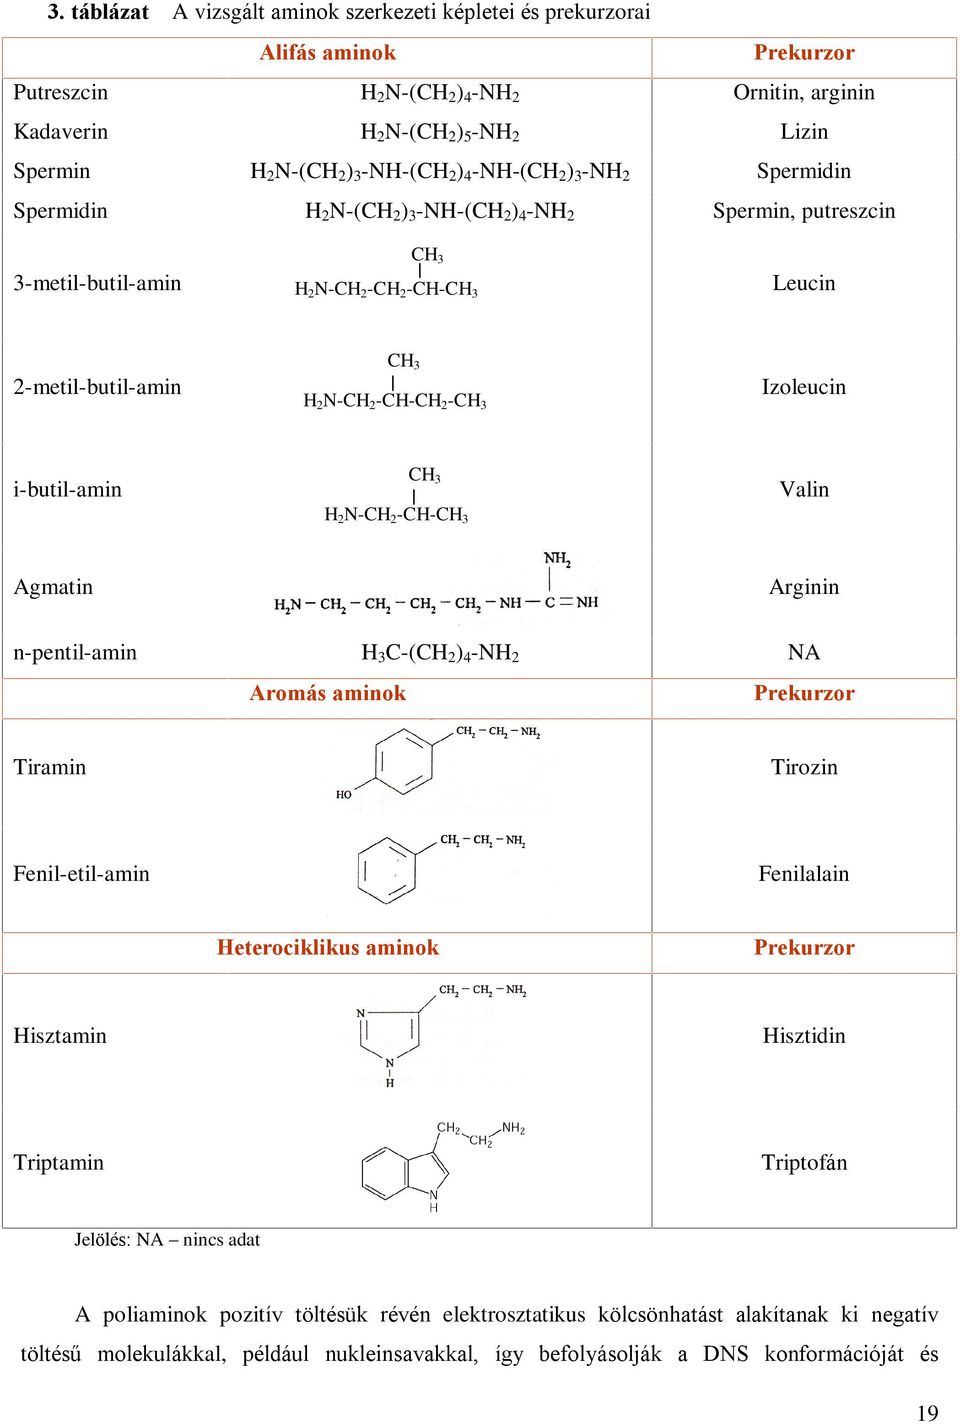 N-CH 2 -CH-CH 2 -CH 3 Izoleucin i-butil-amin CH 3 H 2 N-CH 2 -CH-CH 3 Valin Agmatin Arginin n-pentil-amin H 3 C-(CH 2 ) 4 -NH 2 NA Aromás aminok Prekurzor Tiramin Tirozin Fenil-etil-amin Fenilalain